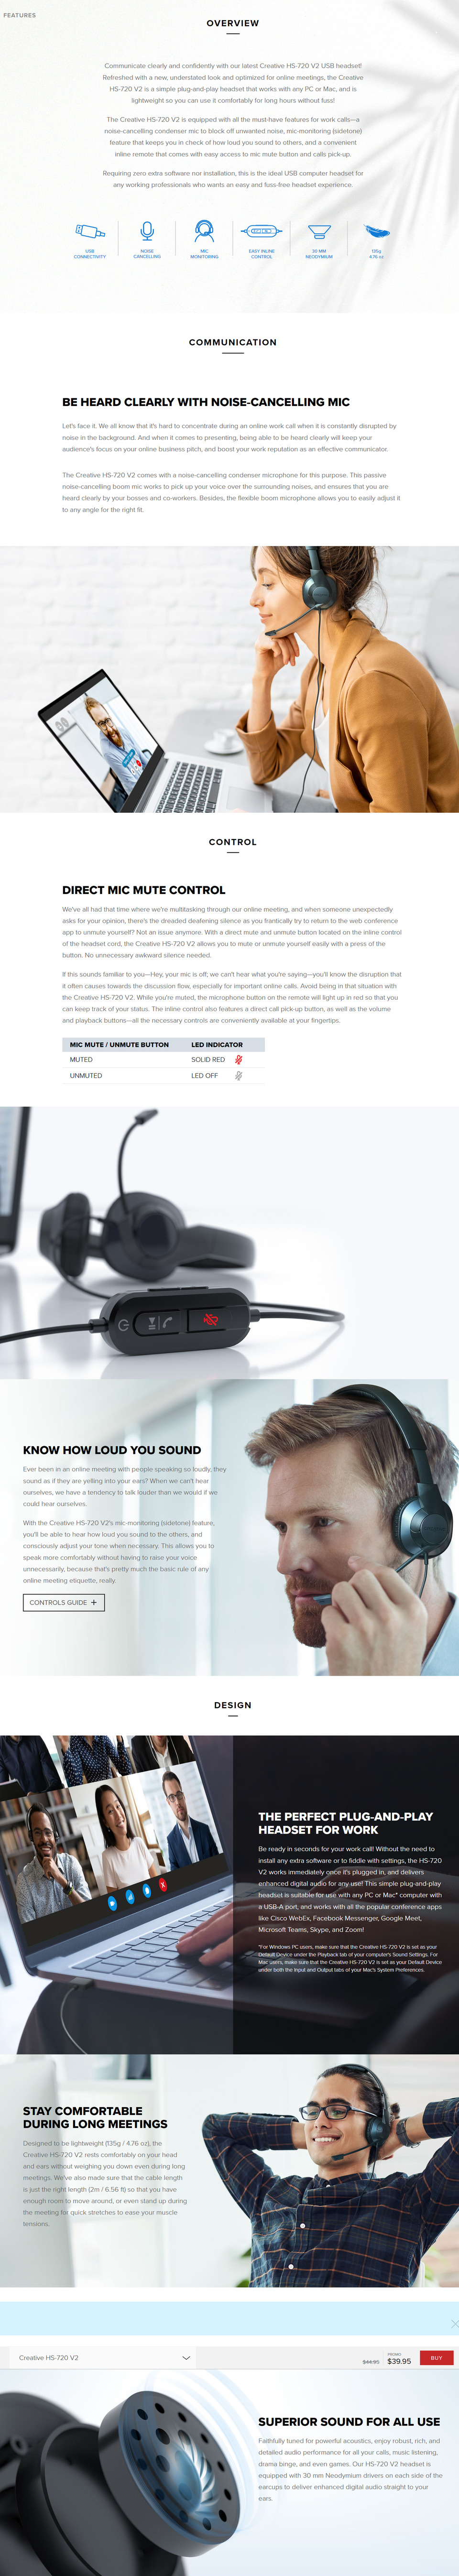 creative chatmax hs-720 v2 usb headset